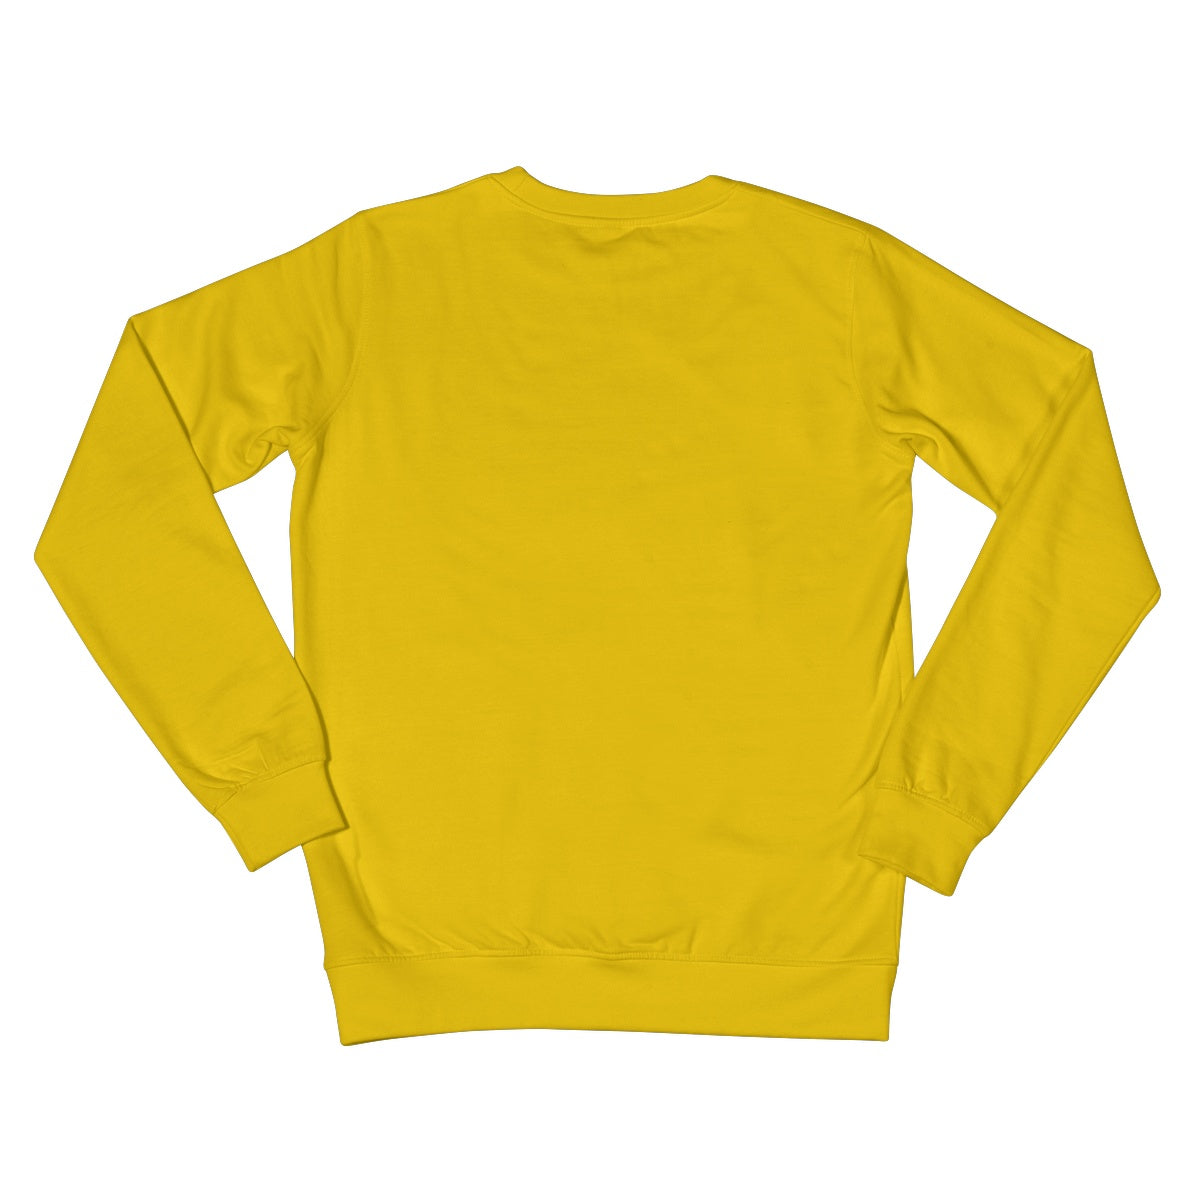 Kuen's Surface, Gold Crew Neck Sweatshirt